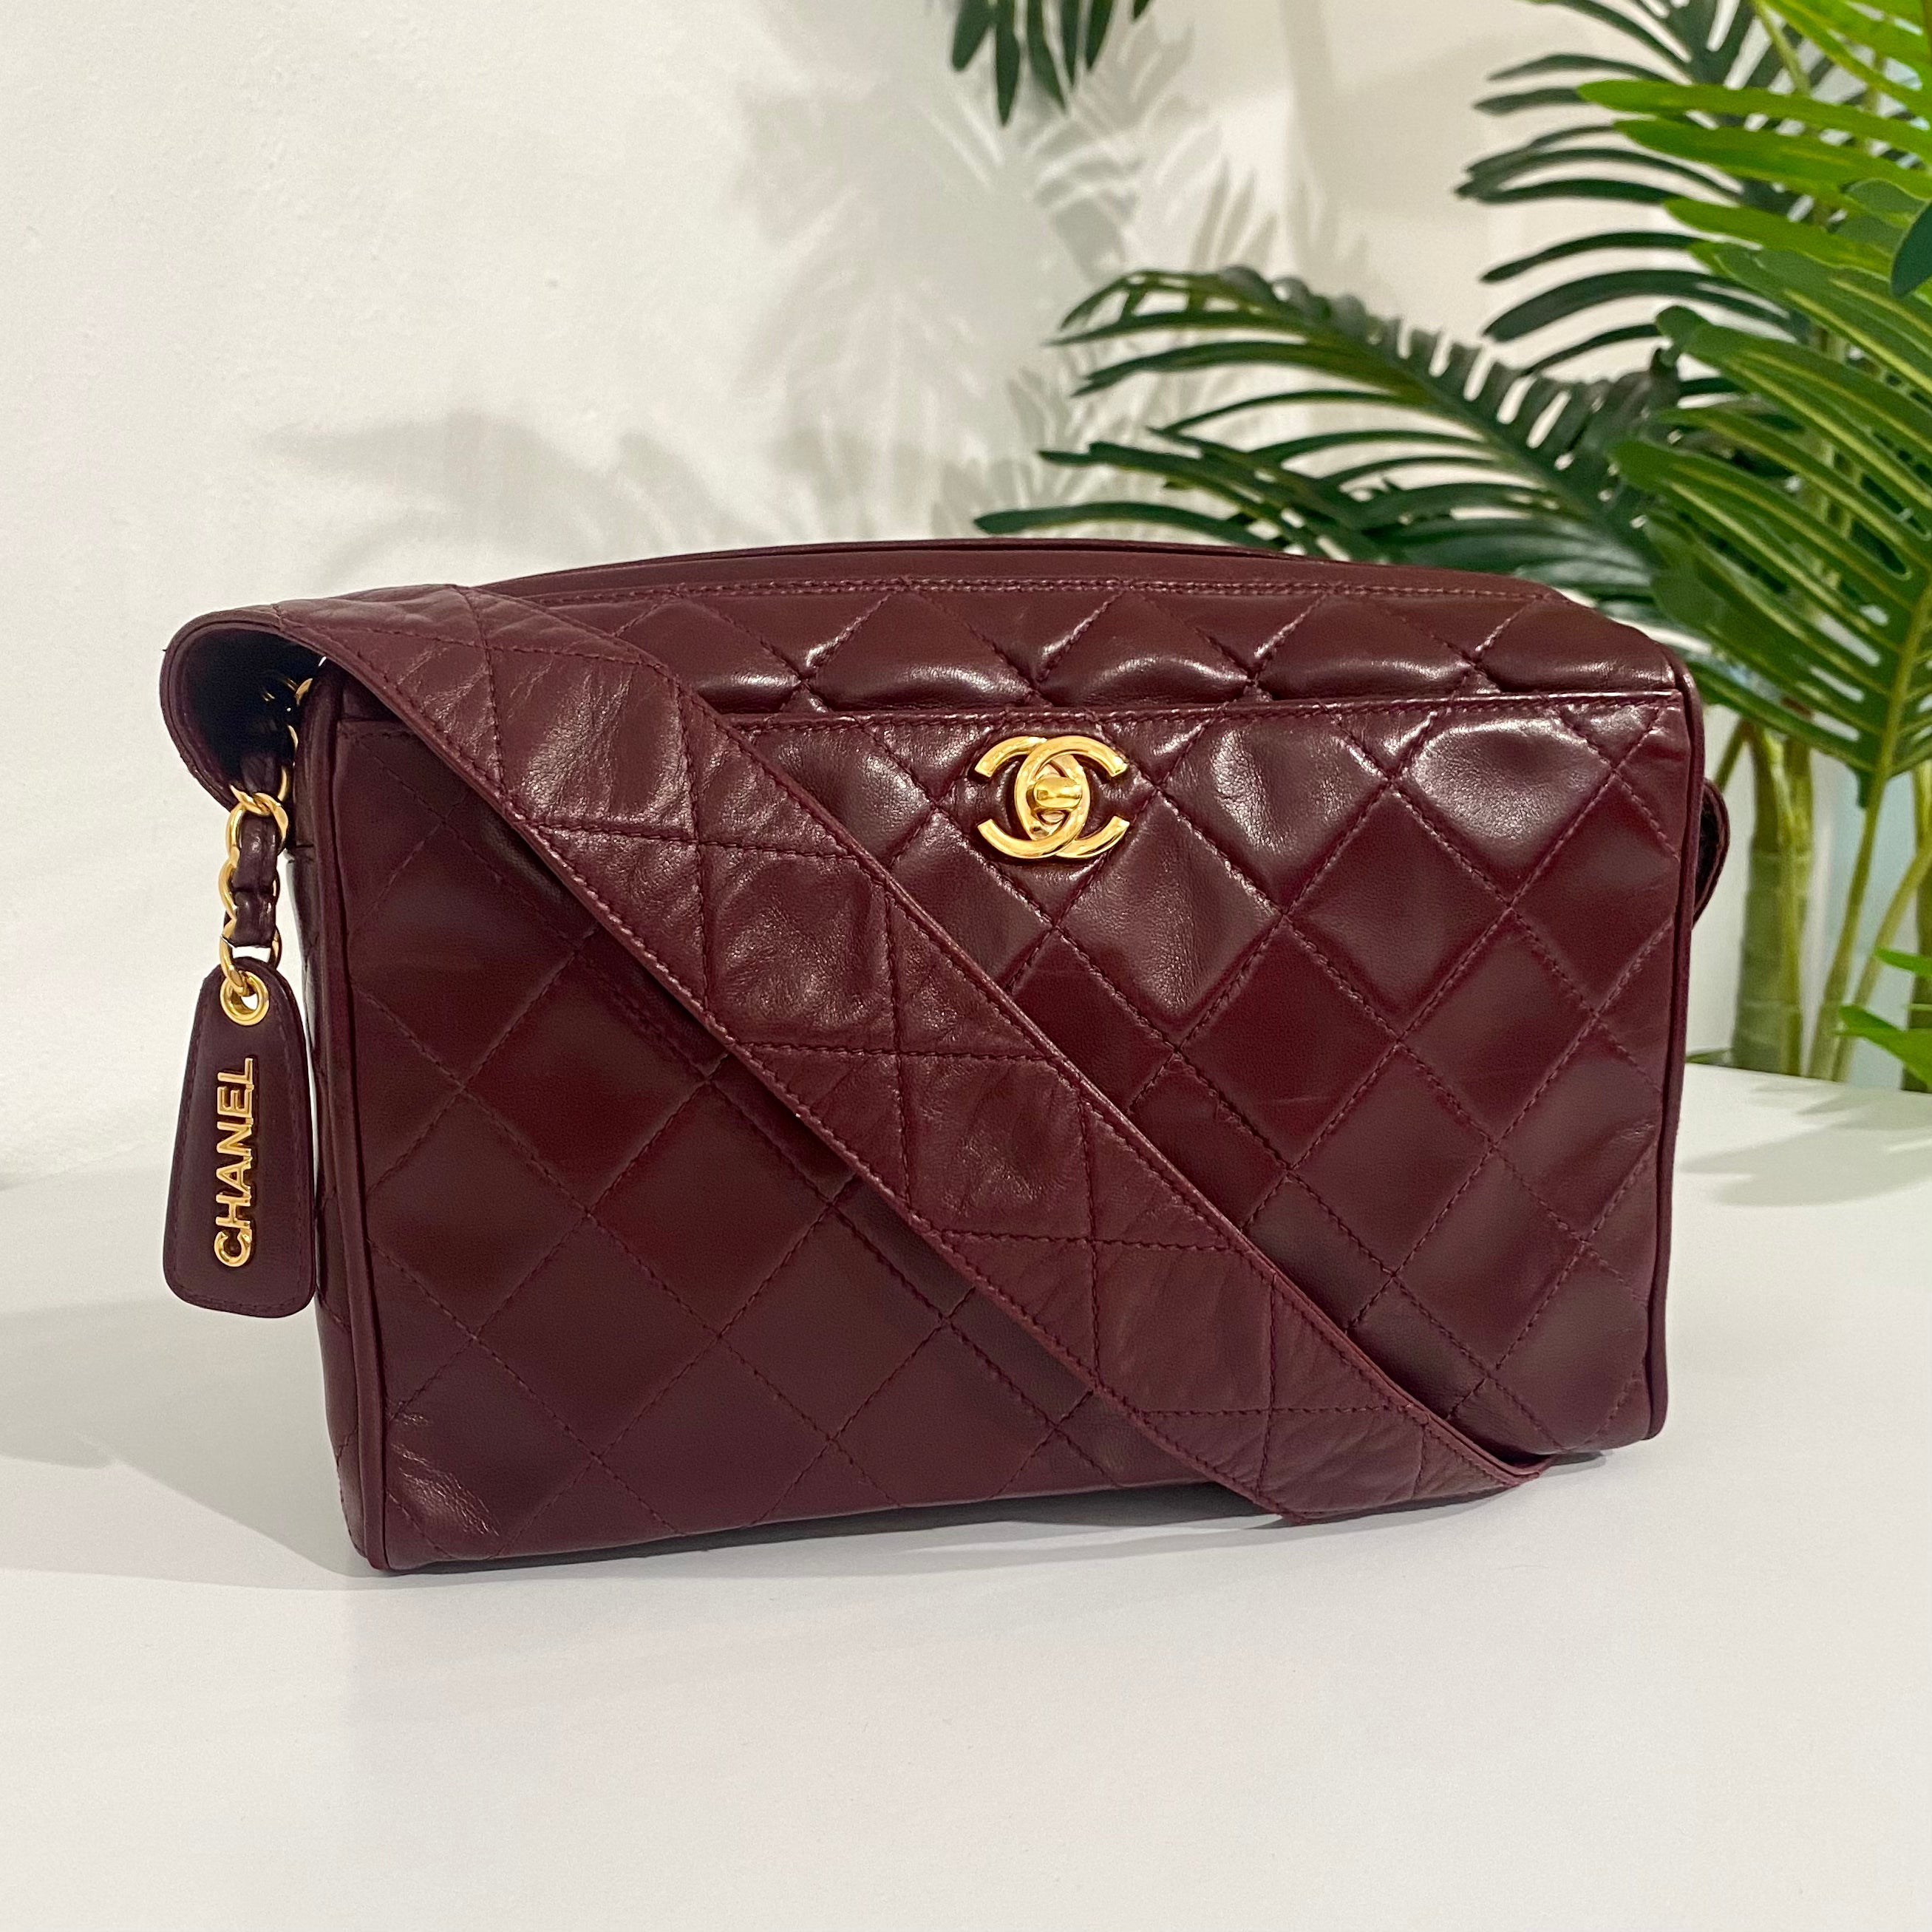 Chanel Beige Quilted Leather Vintage Camera Bag